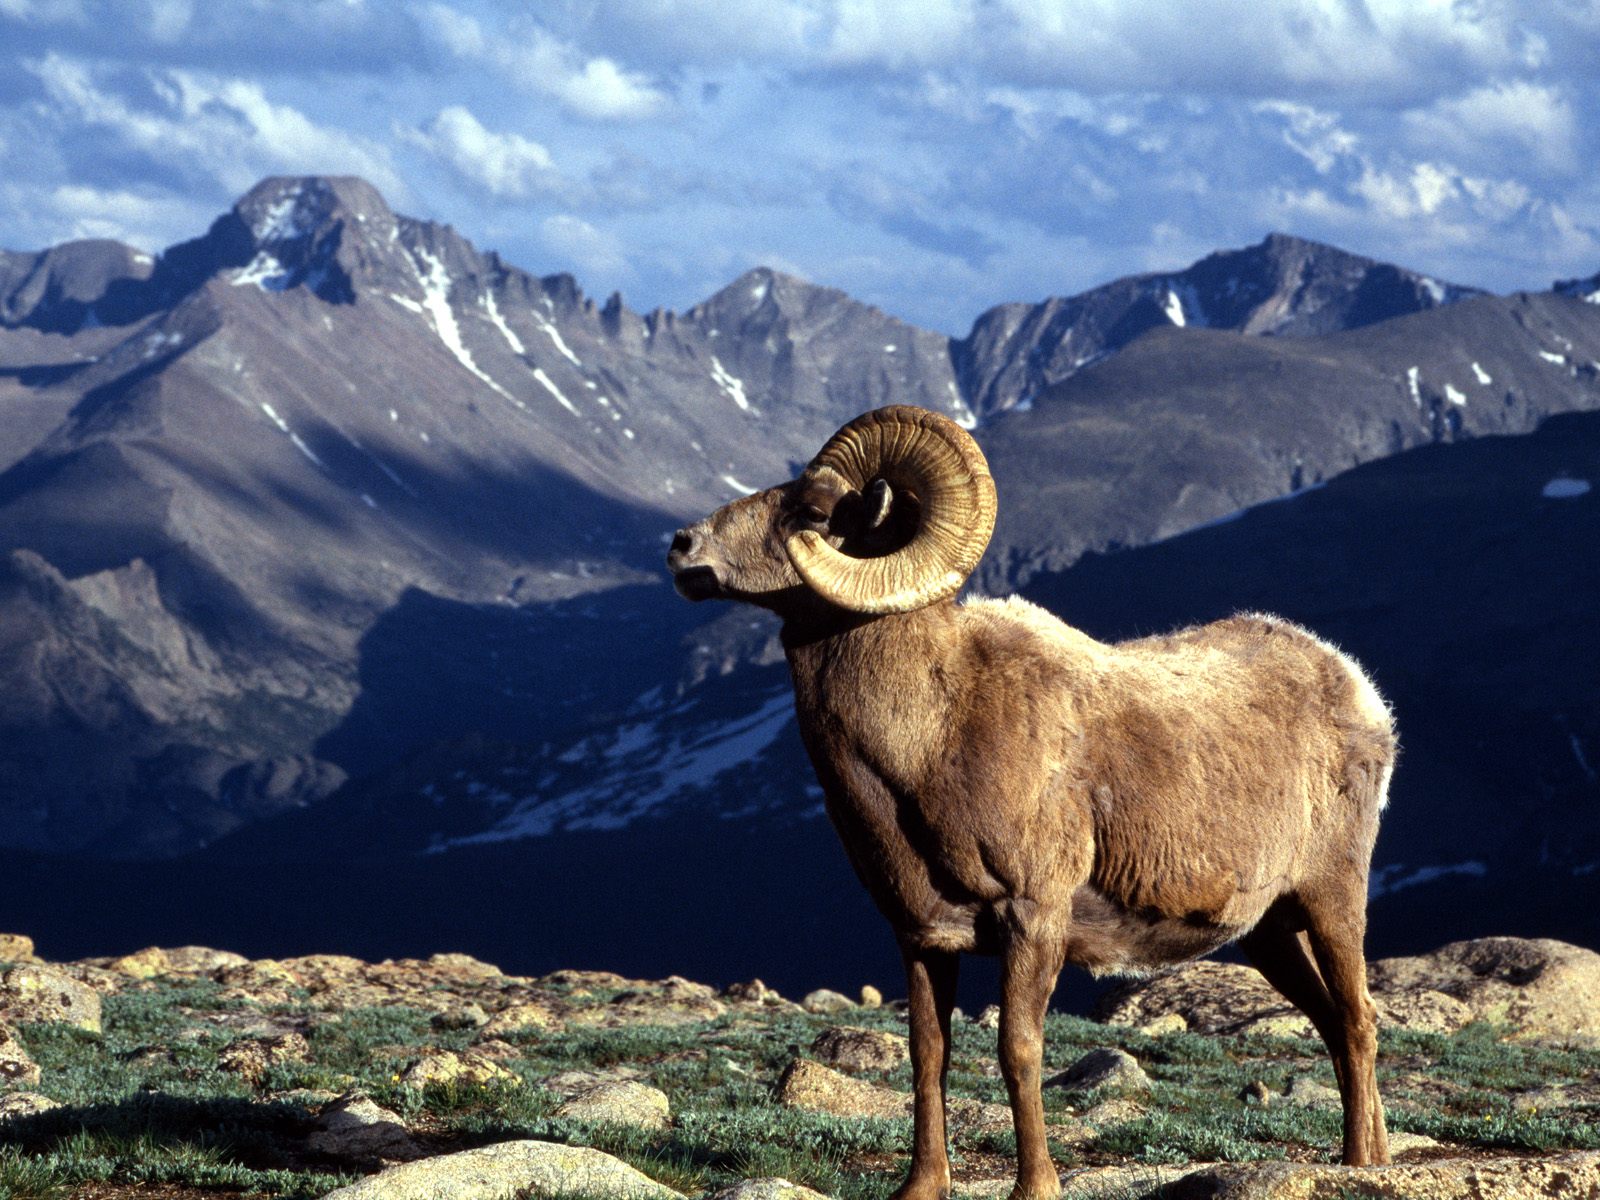 Big Horn Ram, Rocky Mountain National Park near Longmont CO